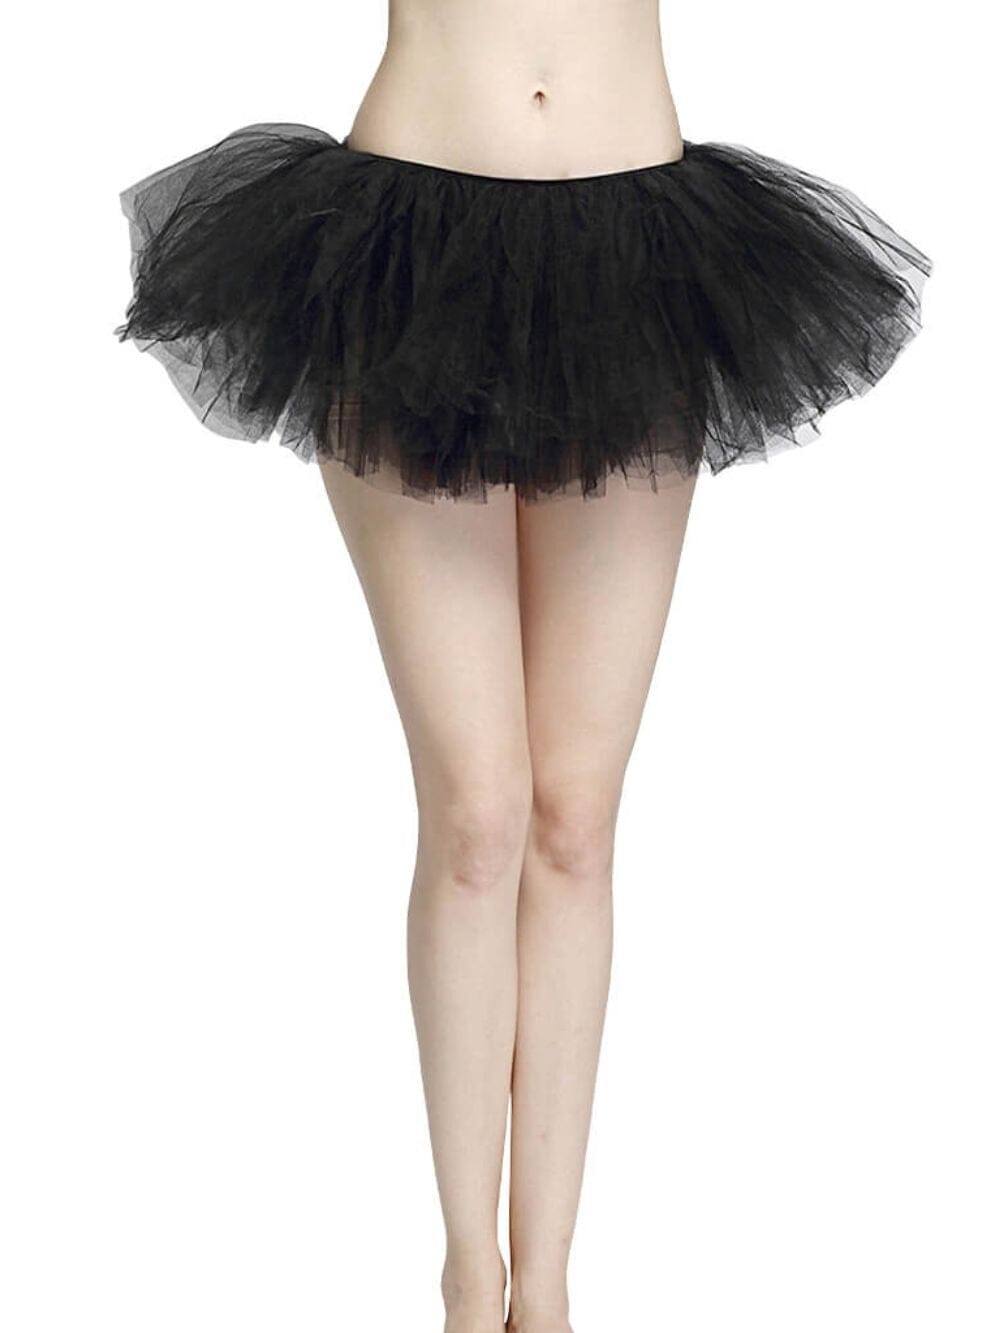 Black - 5 Layer Tutu Skirt for Running, Dress-Up, Costumes - Sydney So Sweet